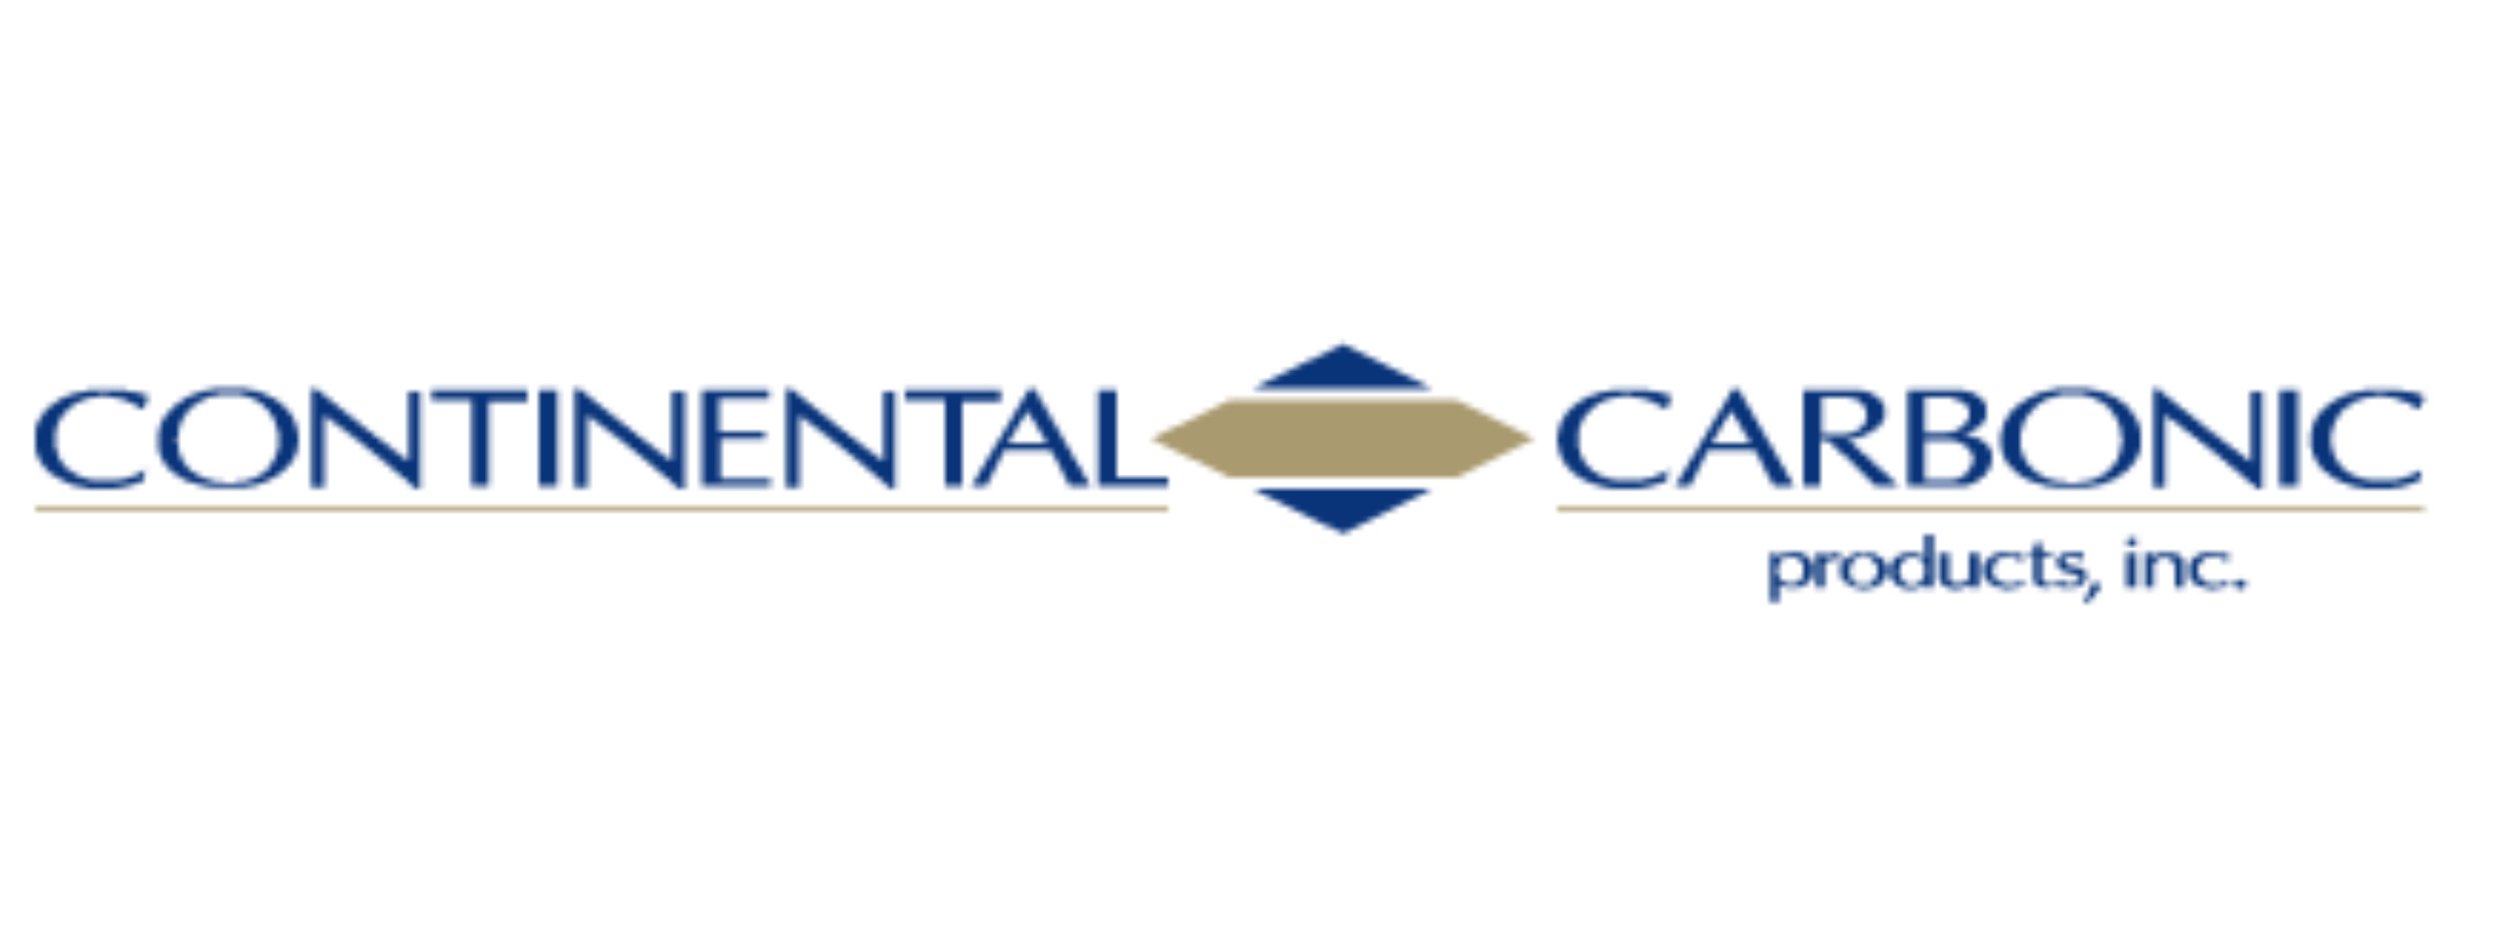 Continental Carbonic Logo (1).jpg